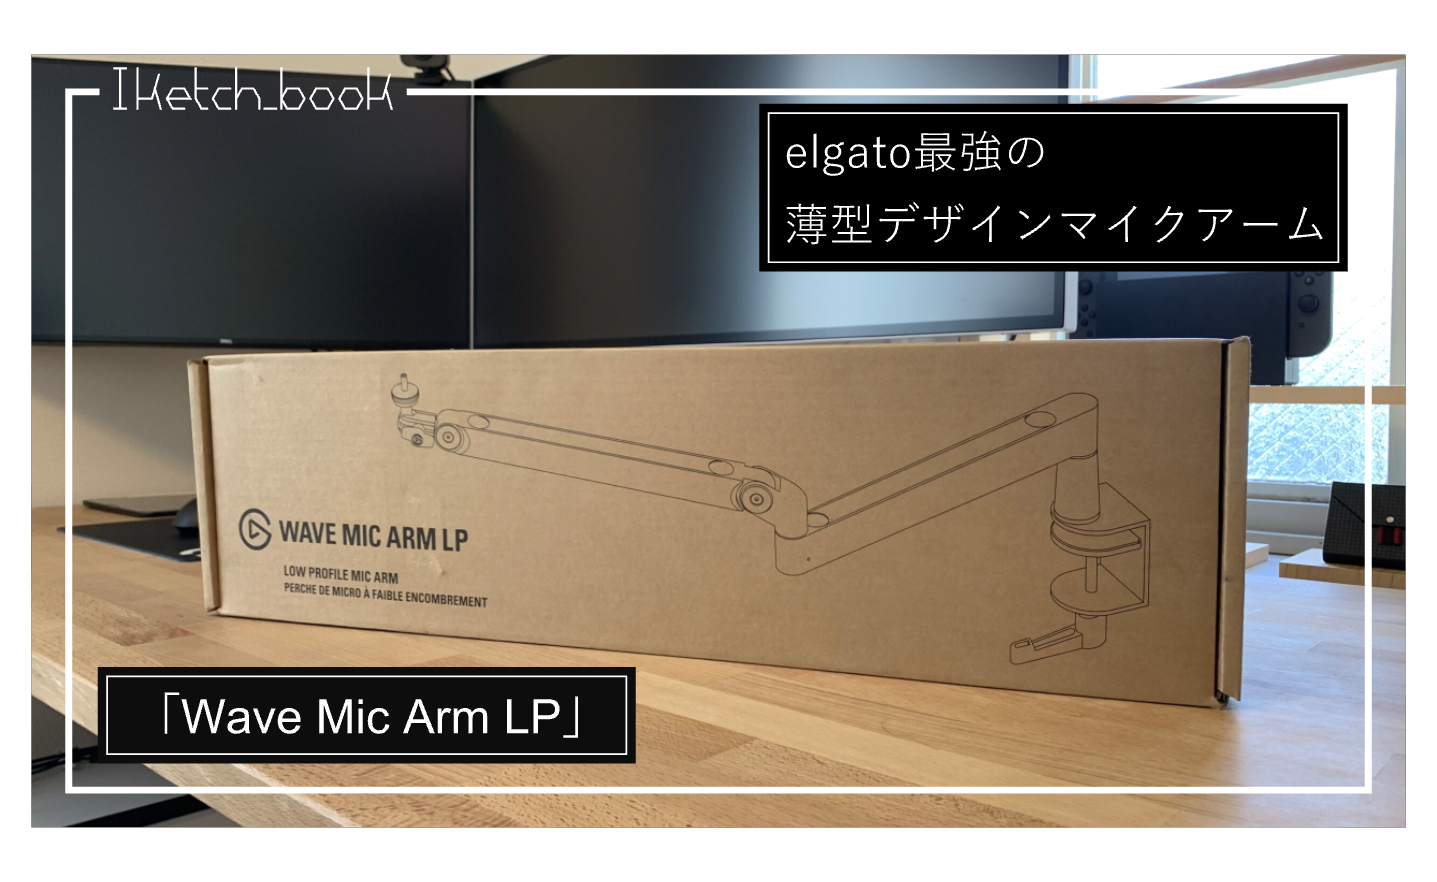 elgato最強の薄型デザインマイクアーム「Wave Mic Arm LP」のレビュー ...